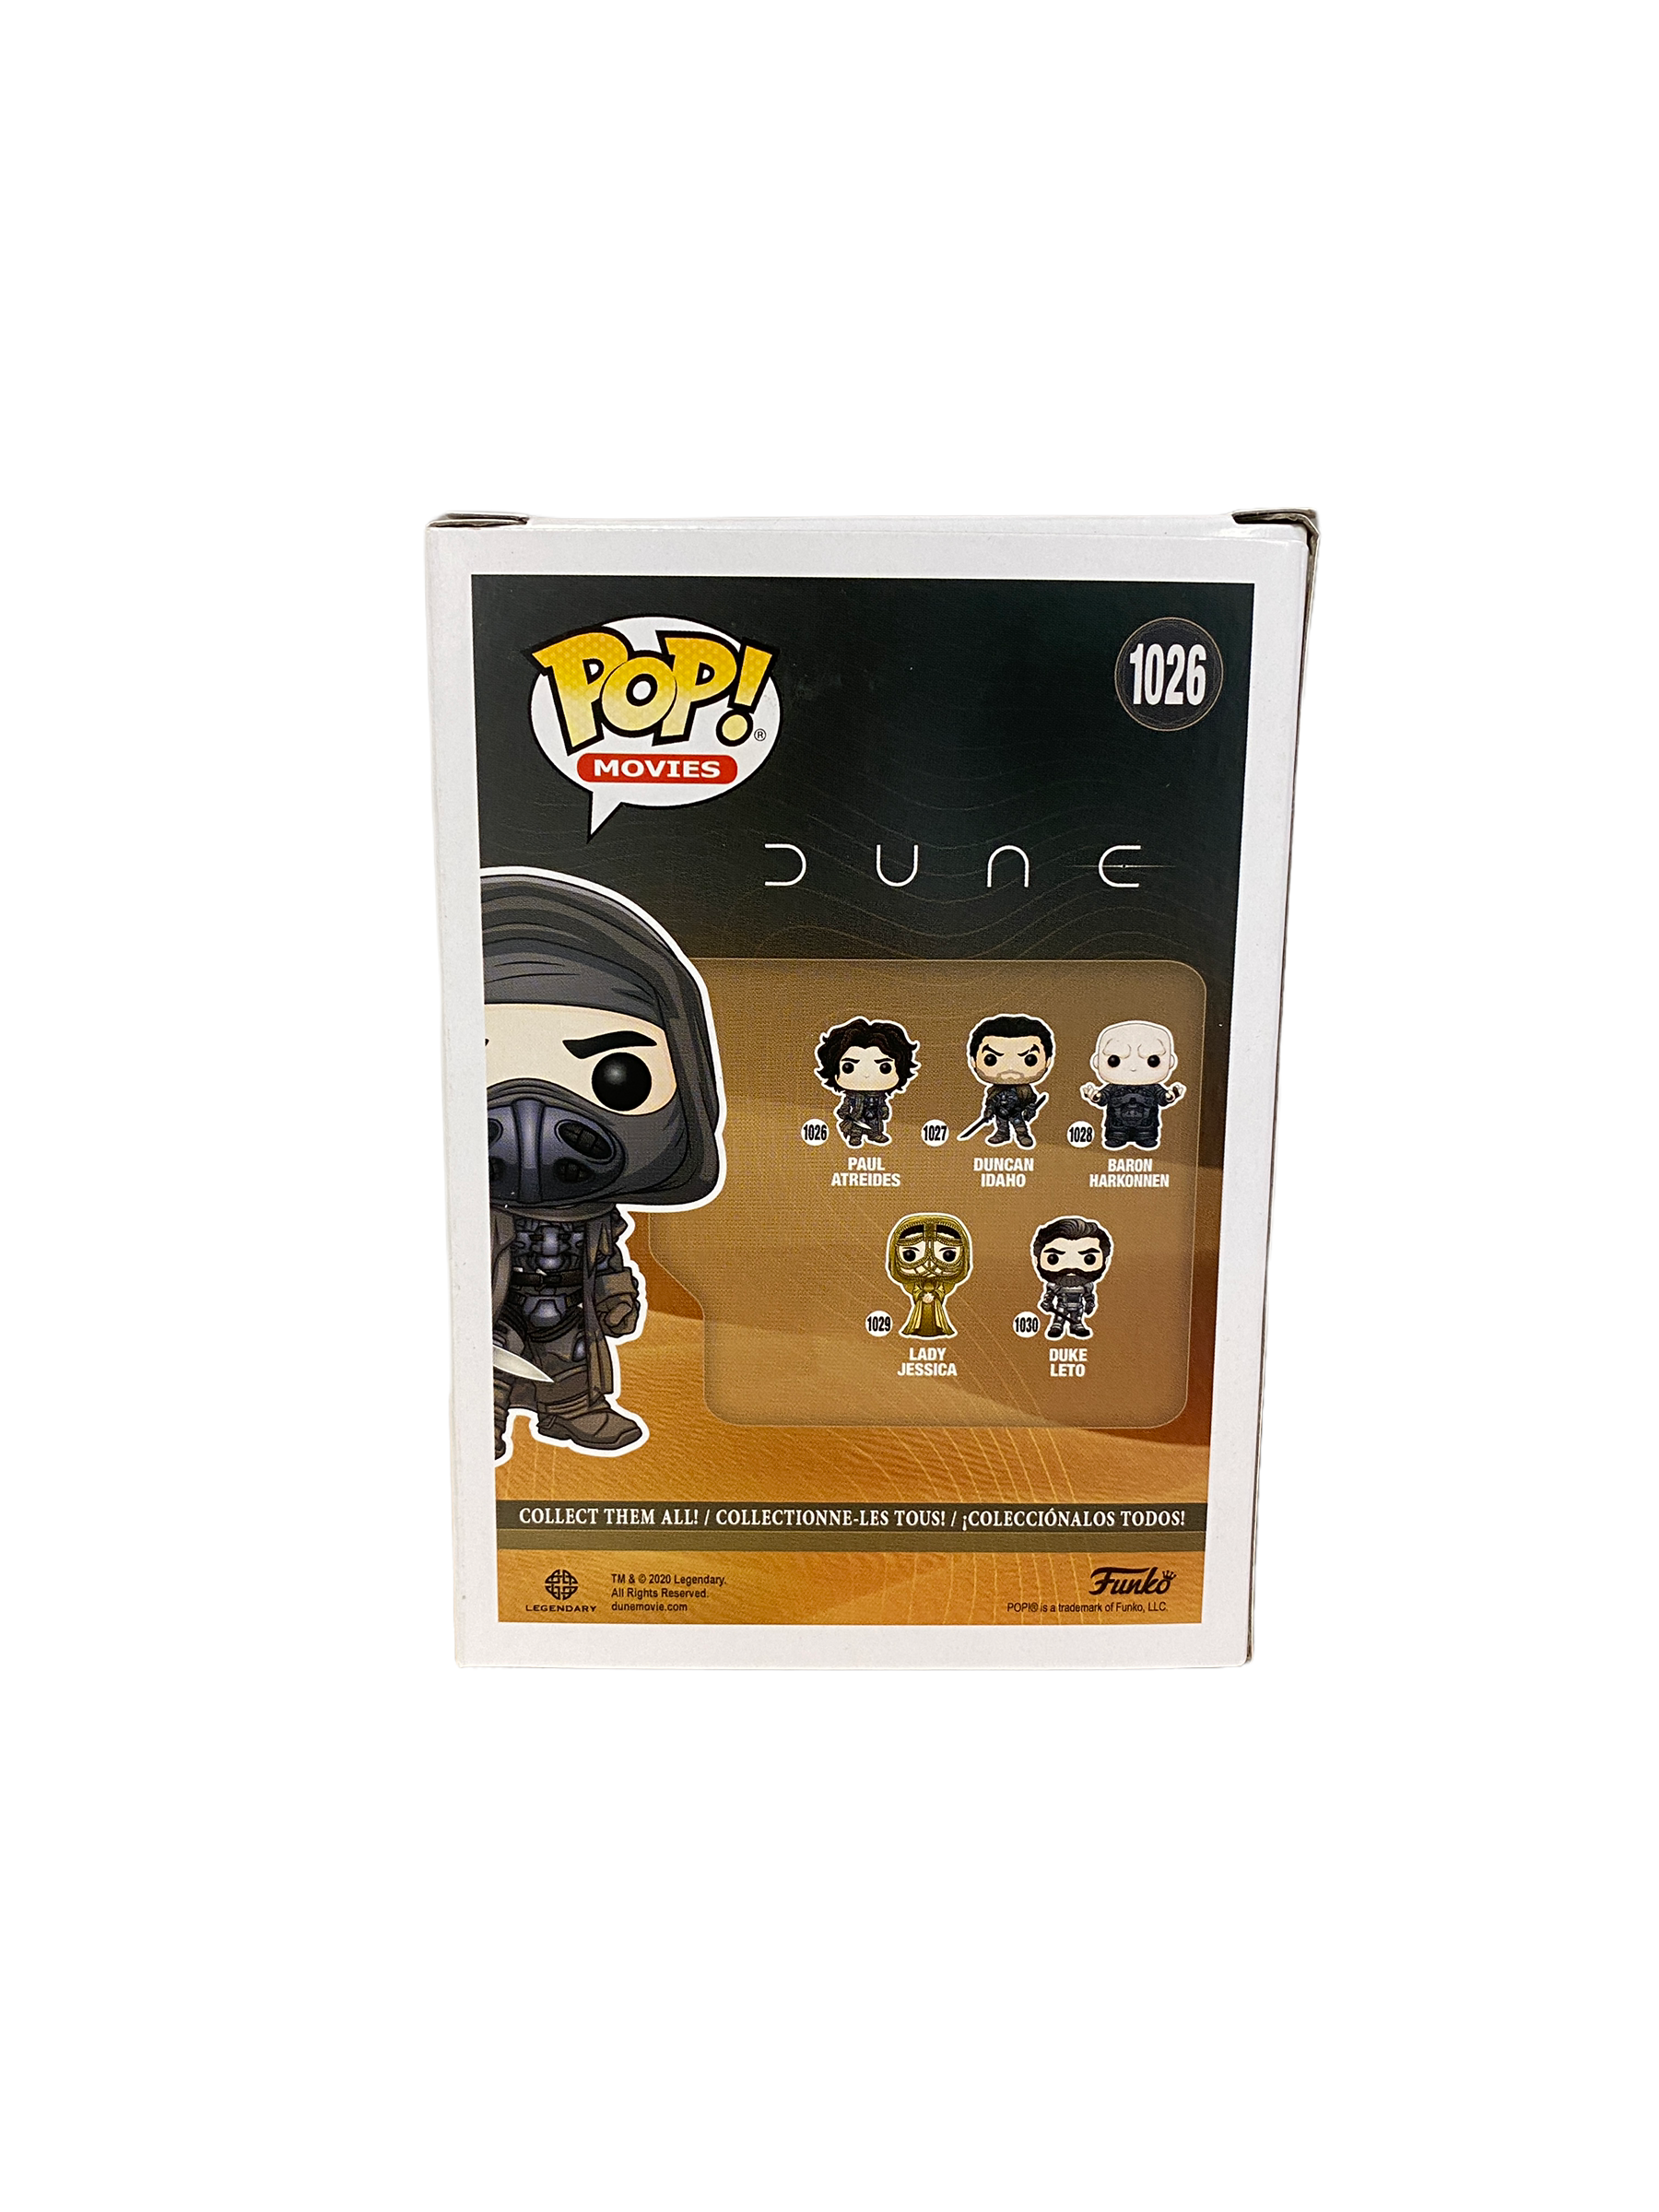 Paul Atreides #1026 (Masked Chase) Funko Pop! - Dune - 2020 Pop! - Condition 9.5+/10